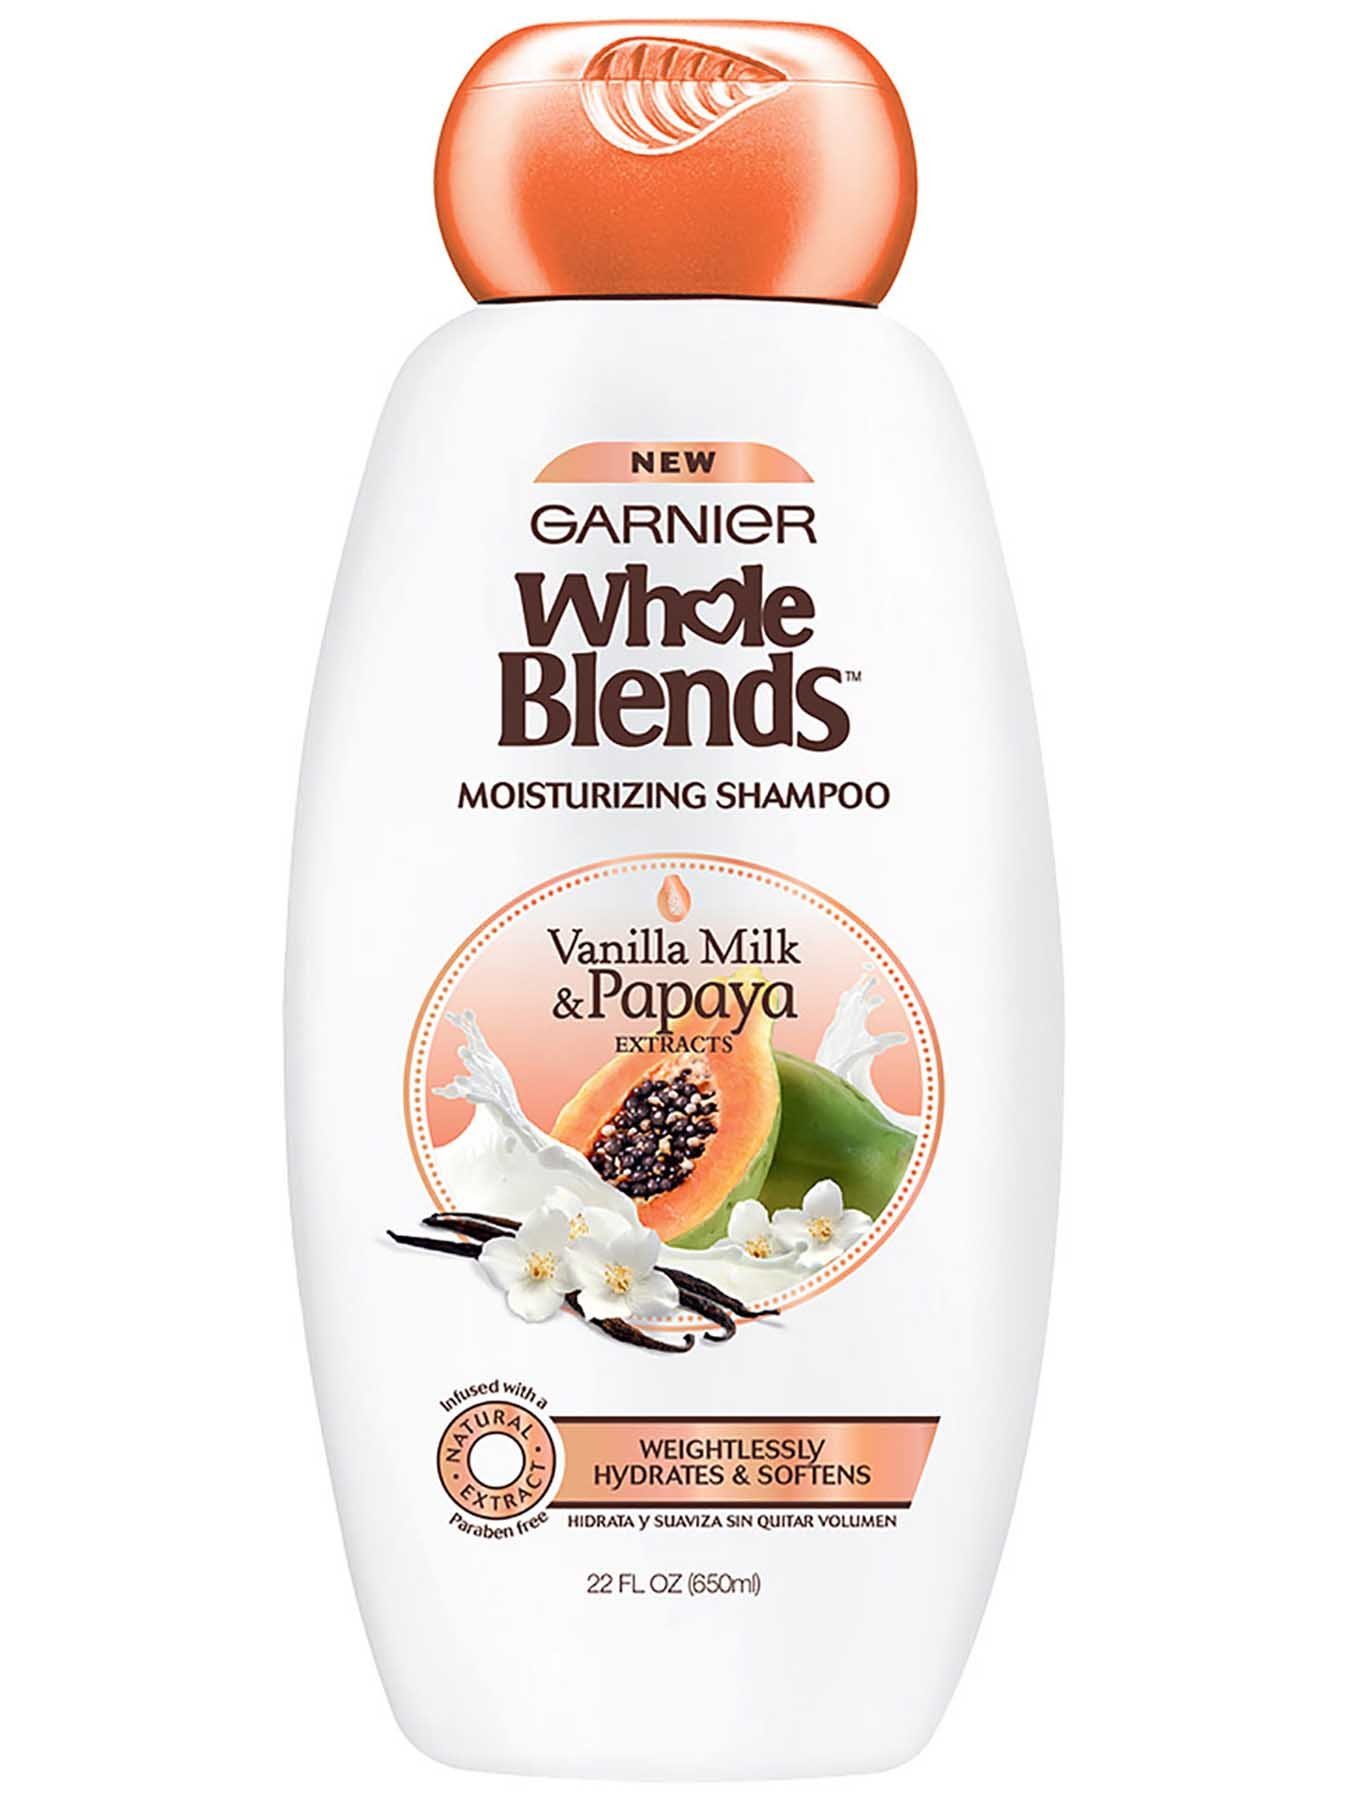 Whole Blends Vanilla & Papaya Moisturizing - Garnier